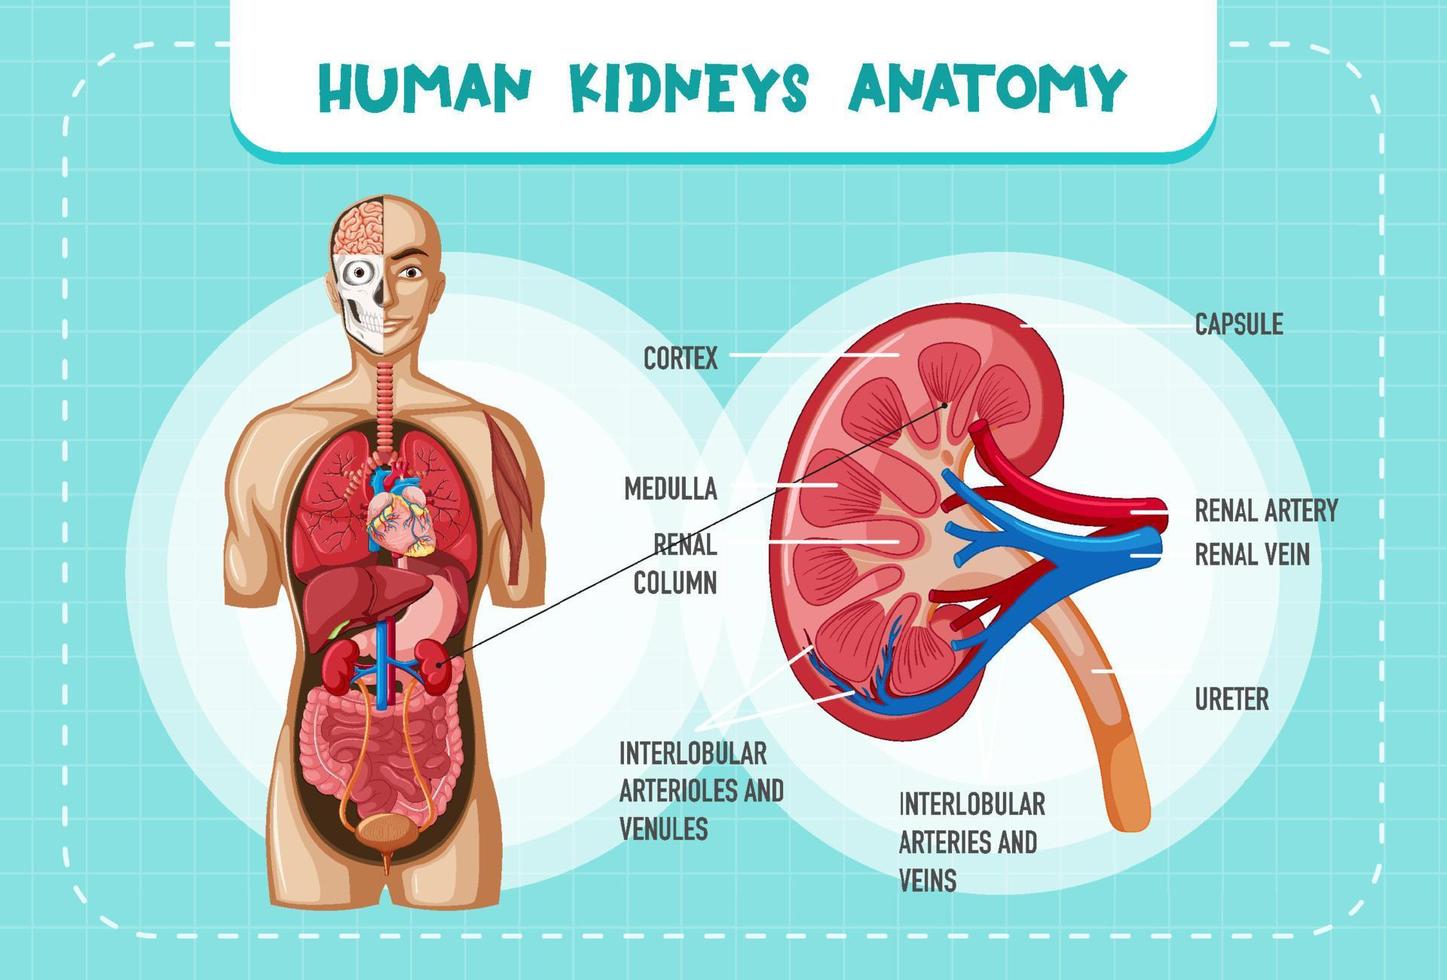 Human internal organ with kidney vector